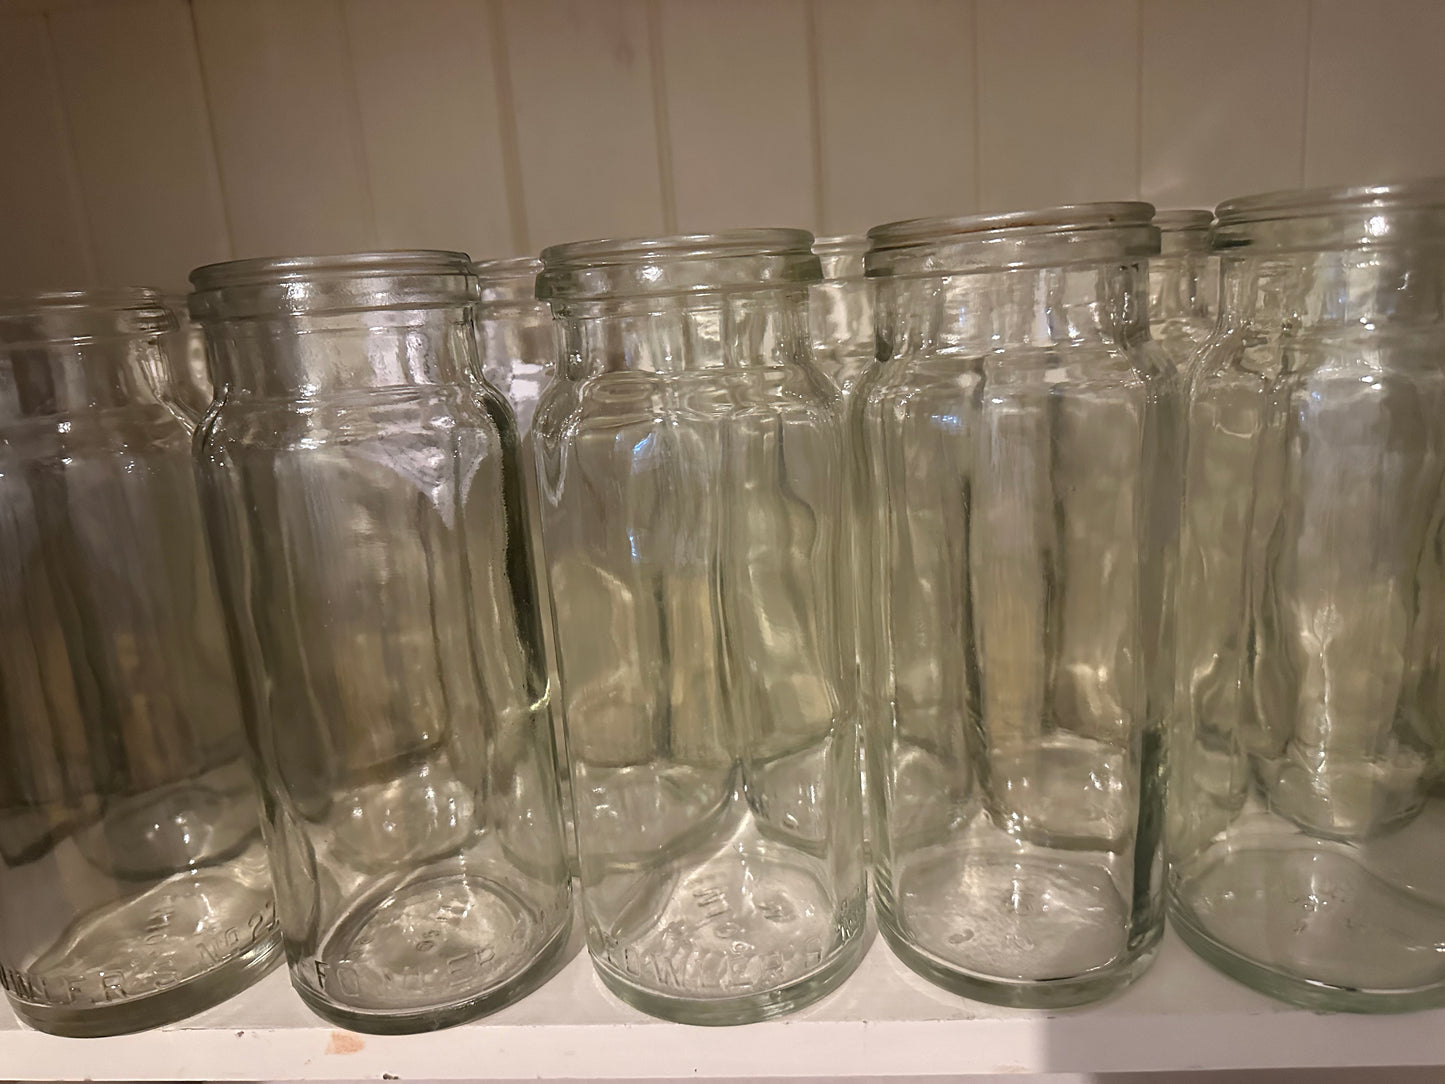 FOR HIRE - Medium Glass flower jars